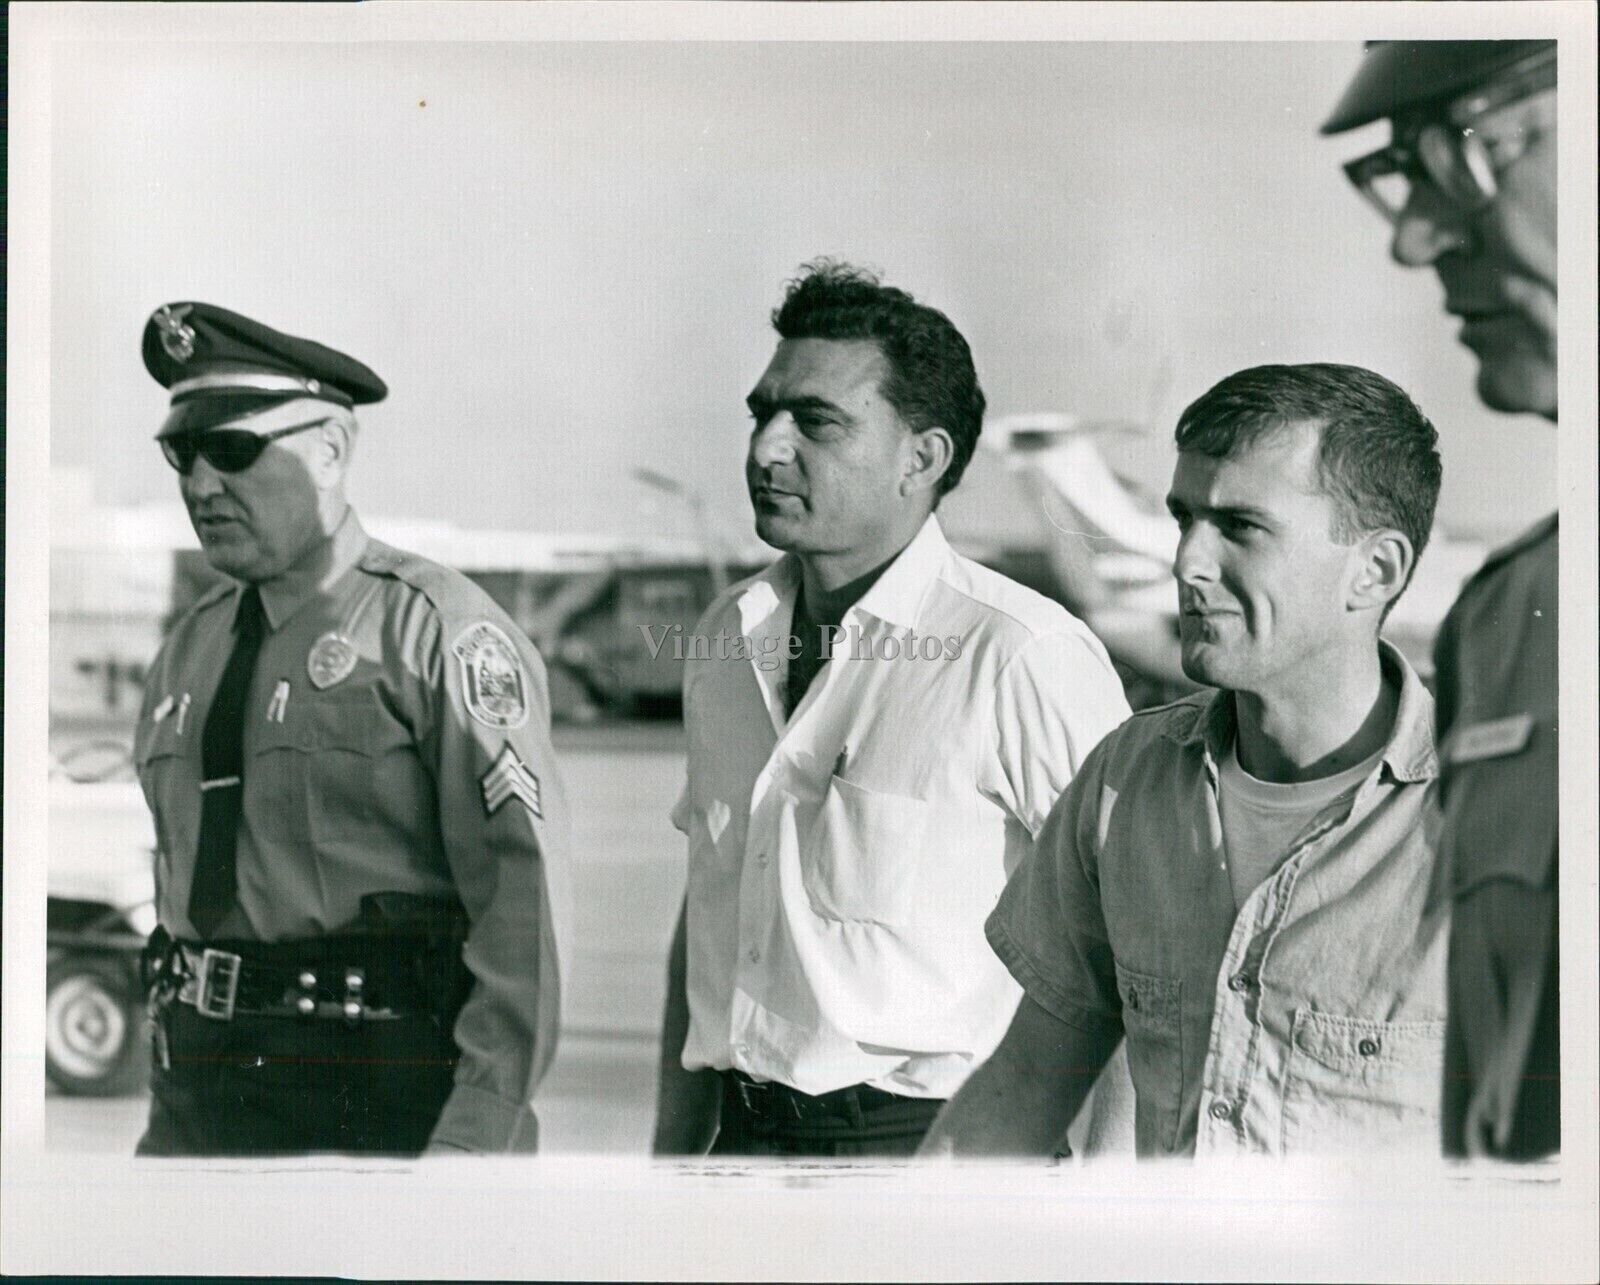 1967 Police Jeff White Pilot Miami Herald Fl Uniform Officer 8X10 Vintage Photo